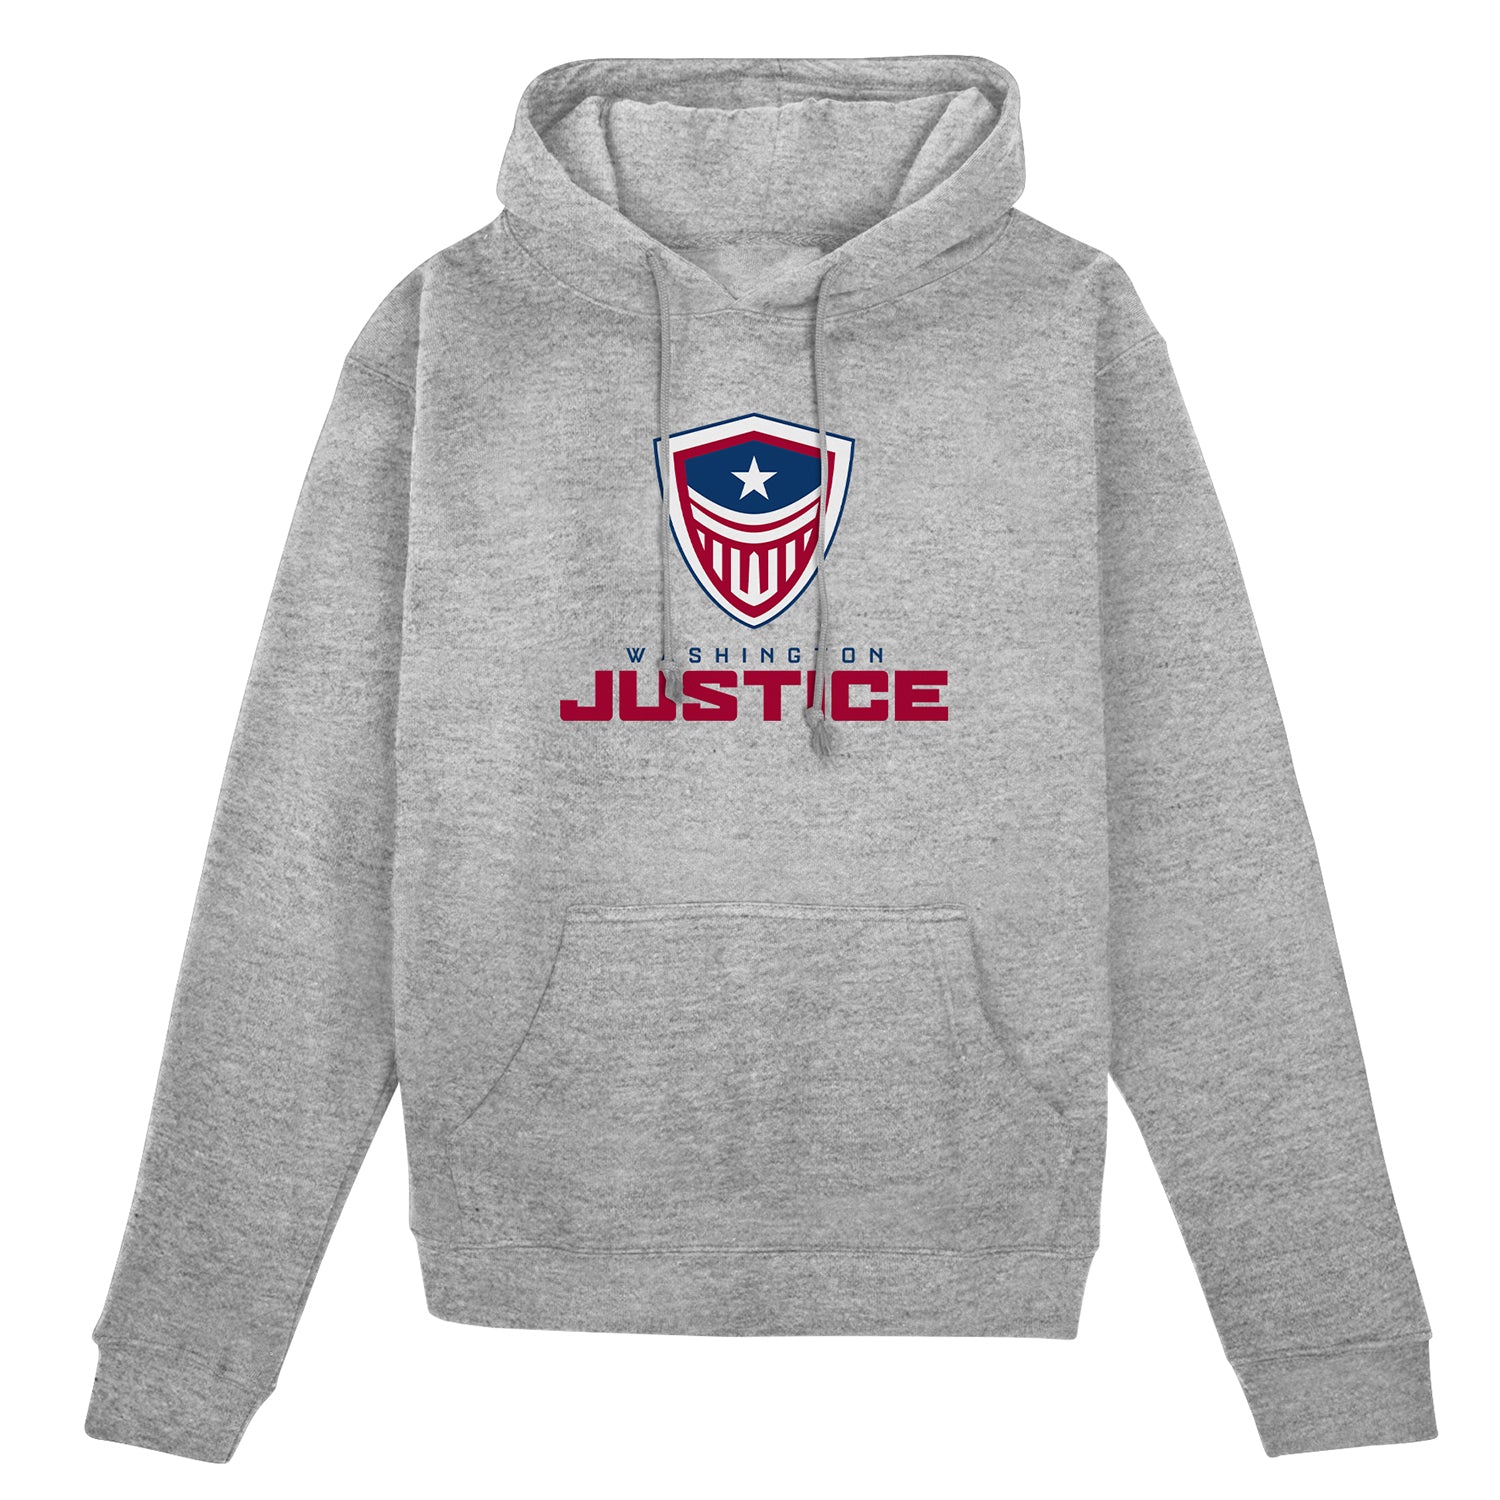 Washington Justice Grey Logo Hoodie - Front View